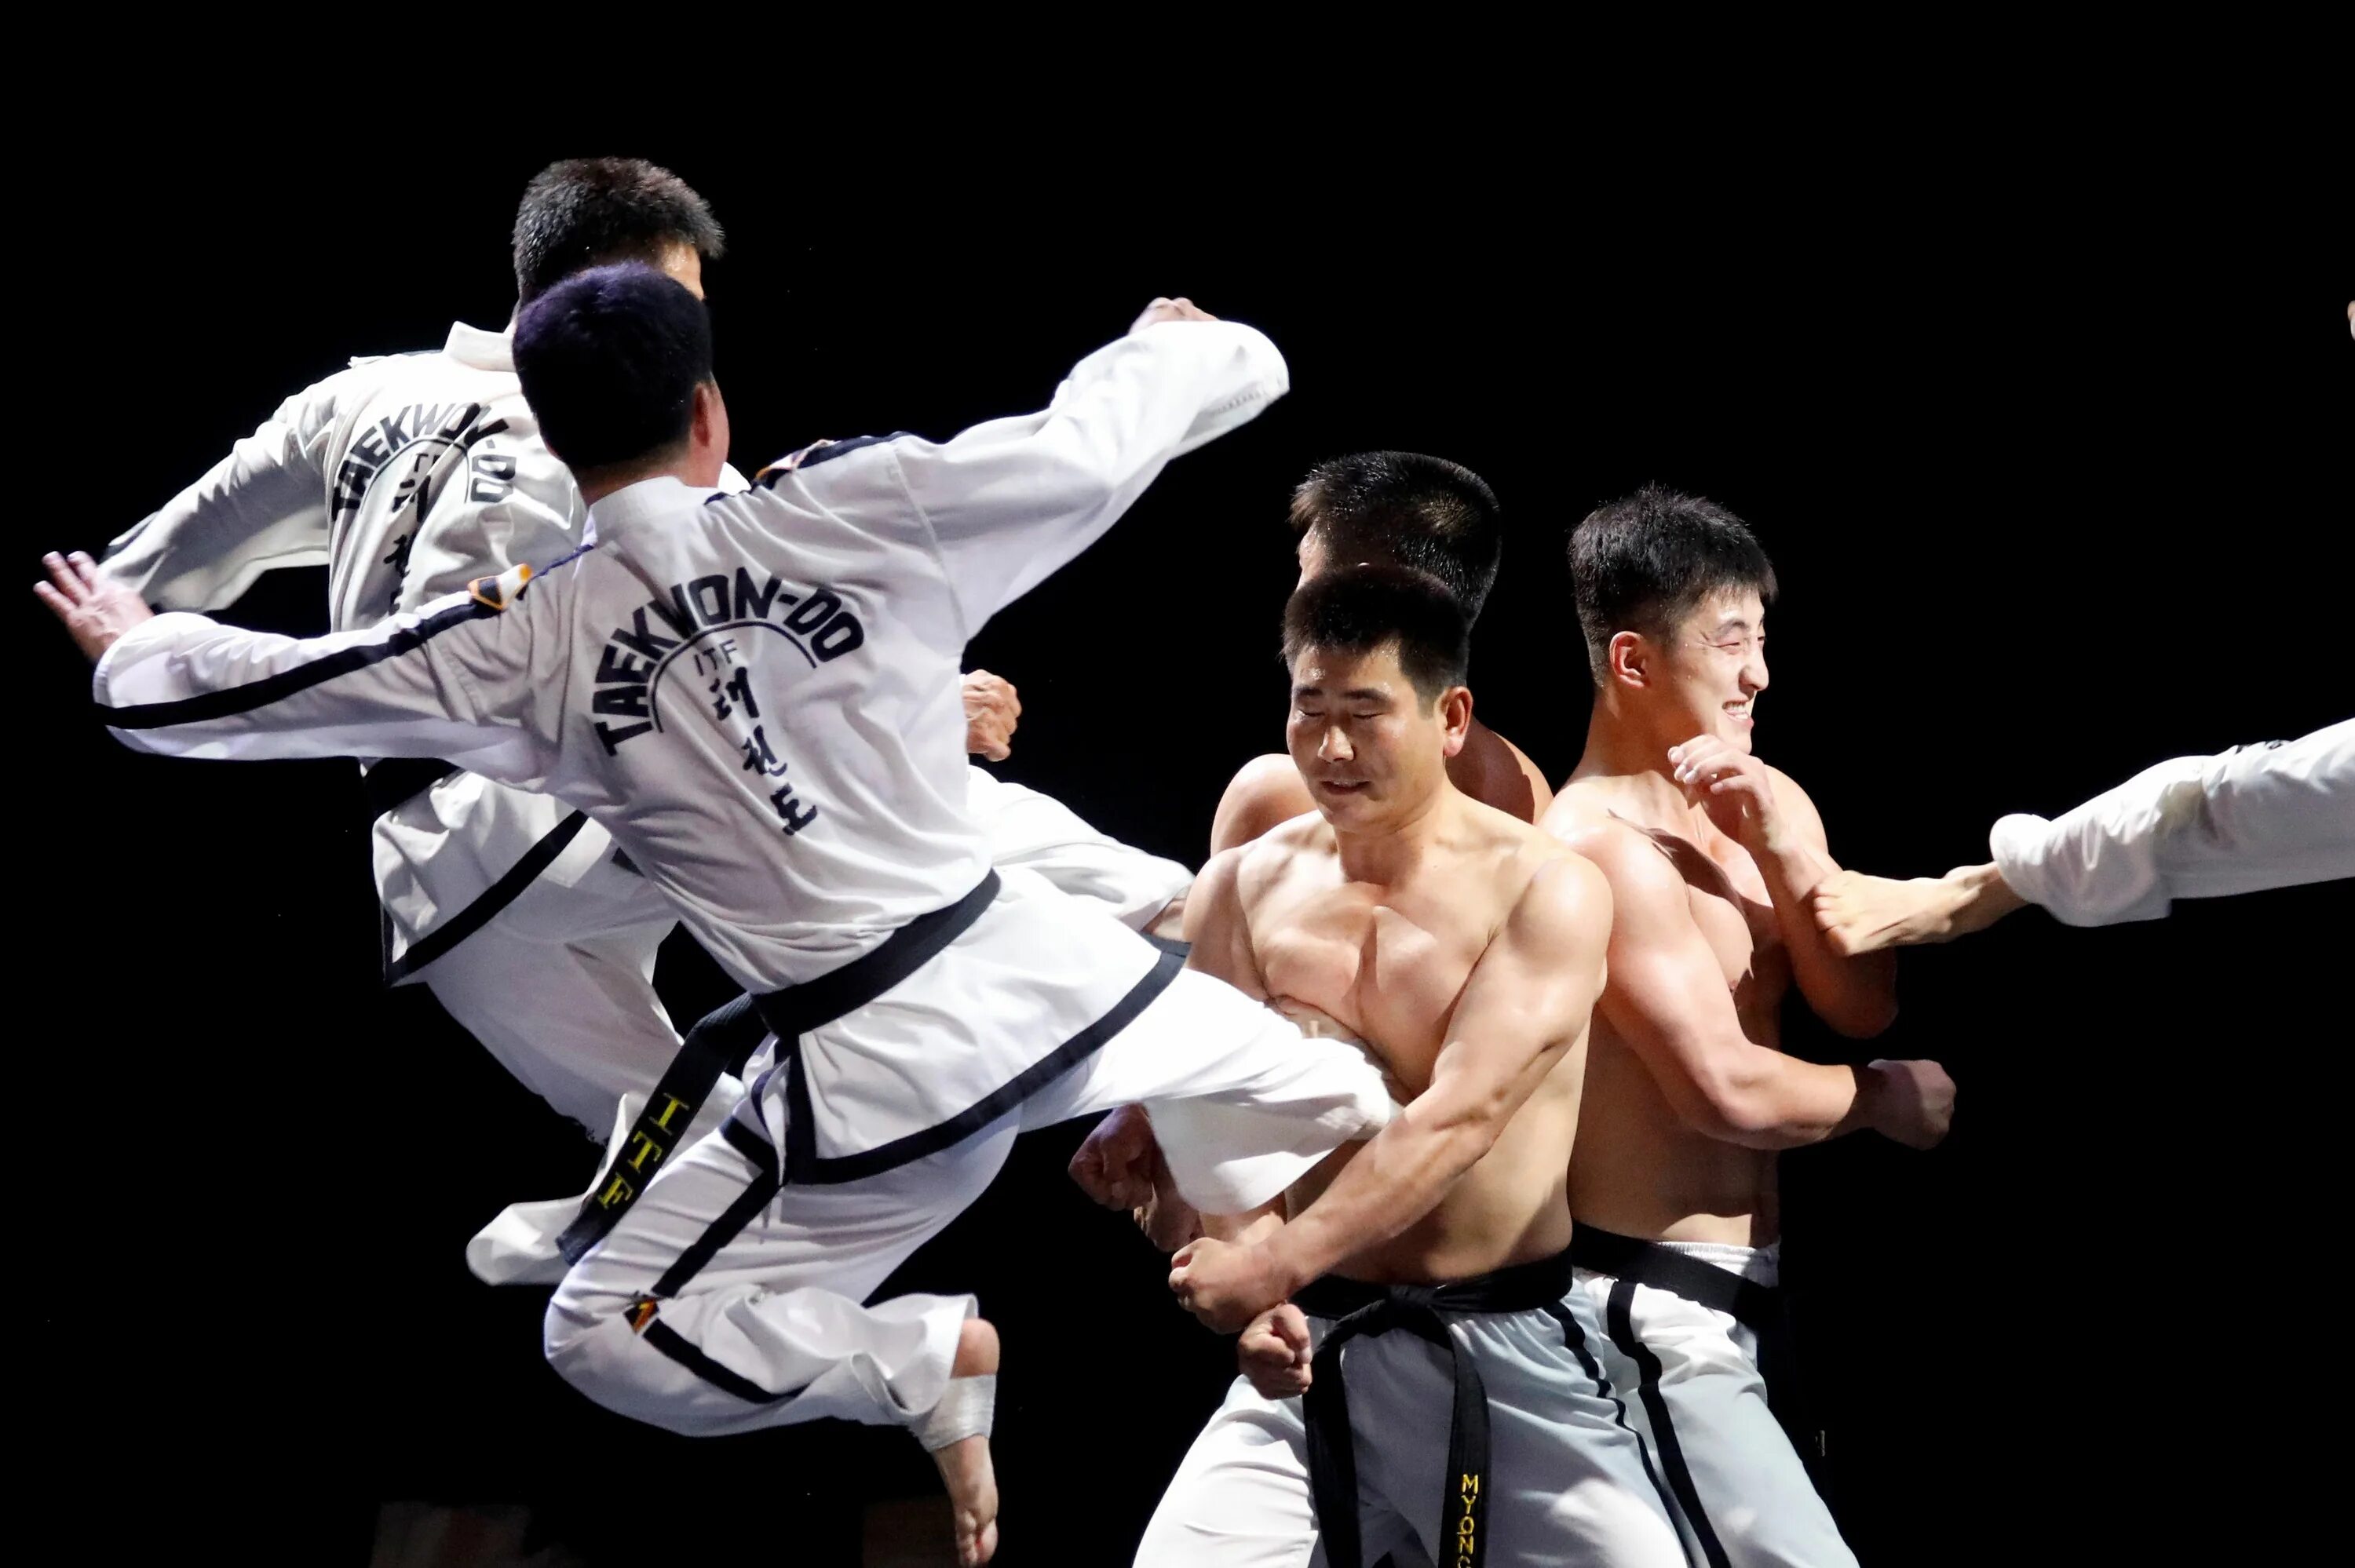 Taekwondo Северная Корея. Таэквондо ИТФ Корея. Таэквондо ИТФ Пхеньян. Северная Корея тхэквондо. Искусство таэквондо